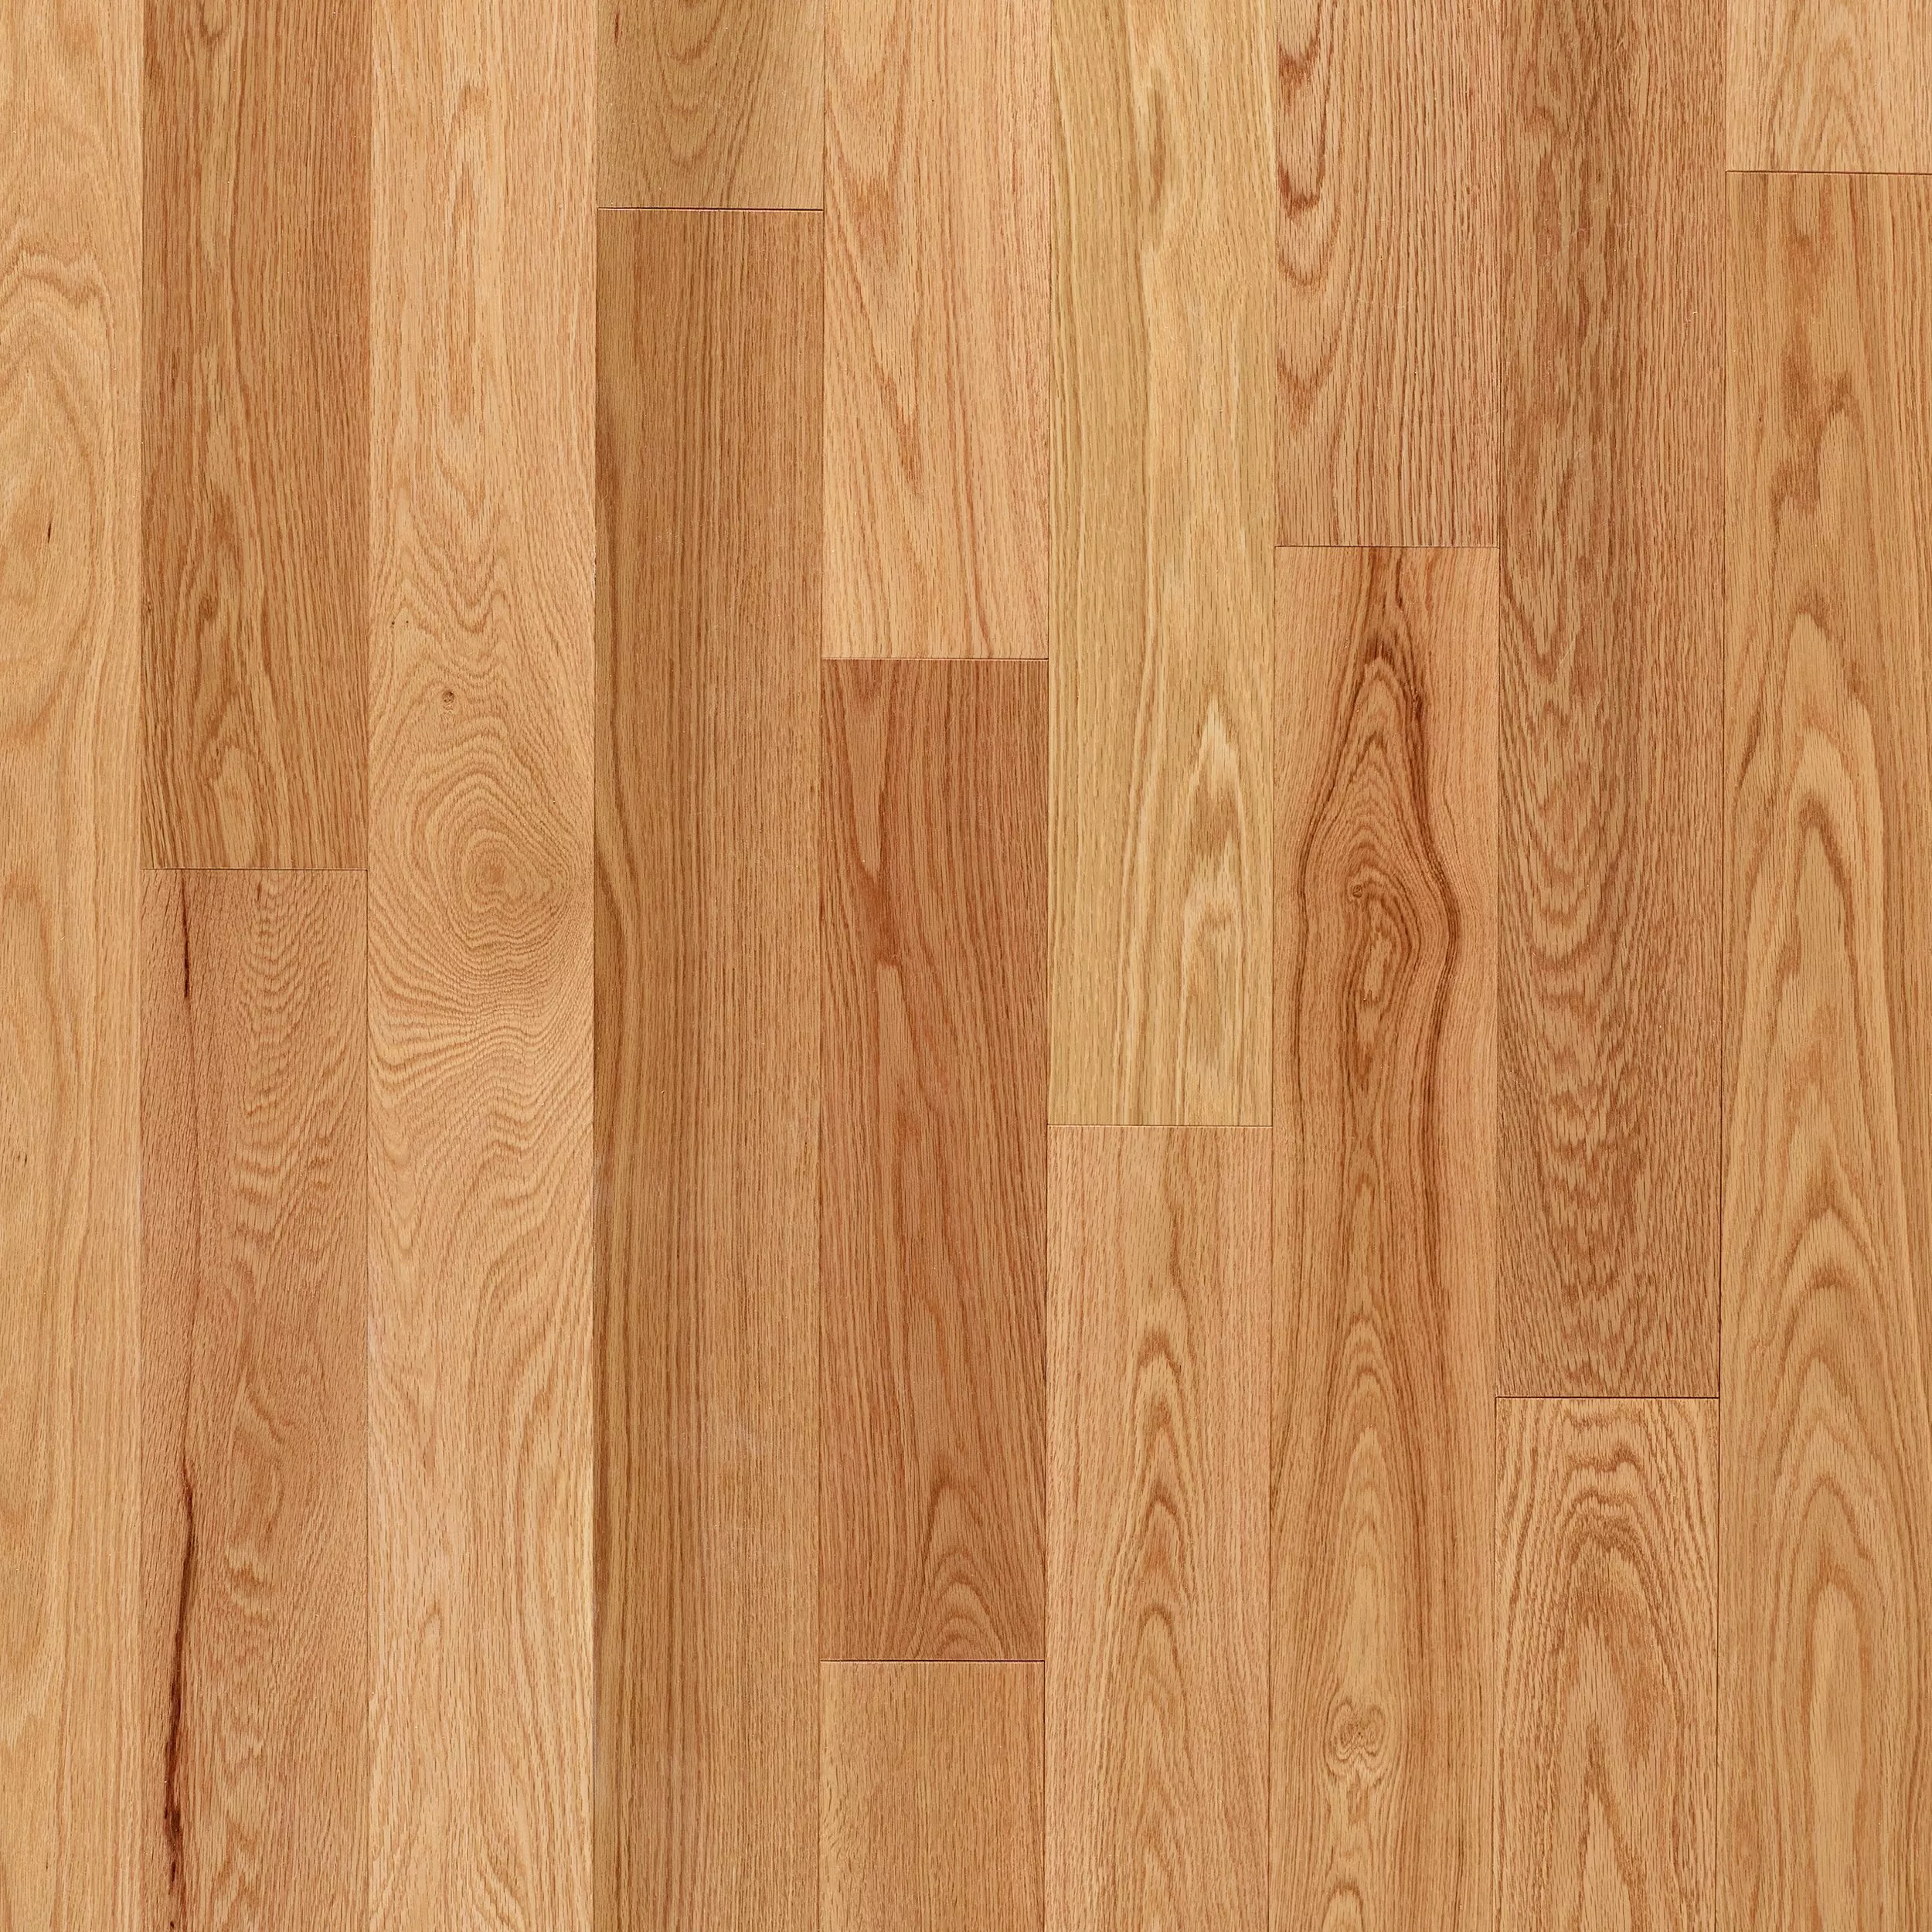 Downing Red Oak Smooth Engineered Hardwood